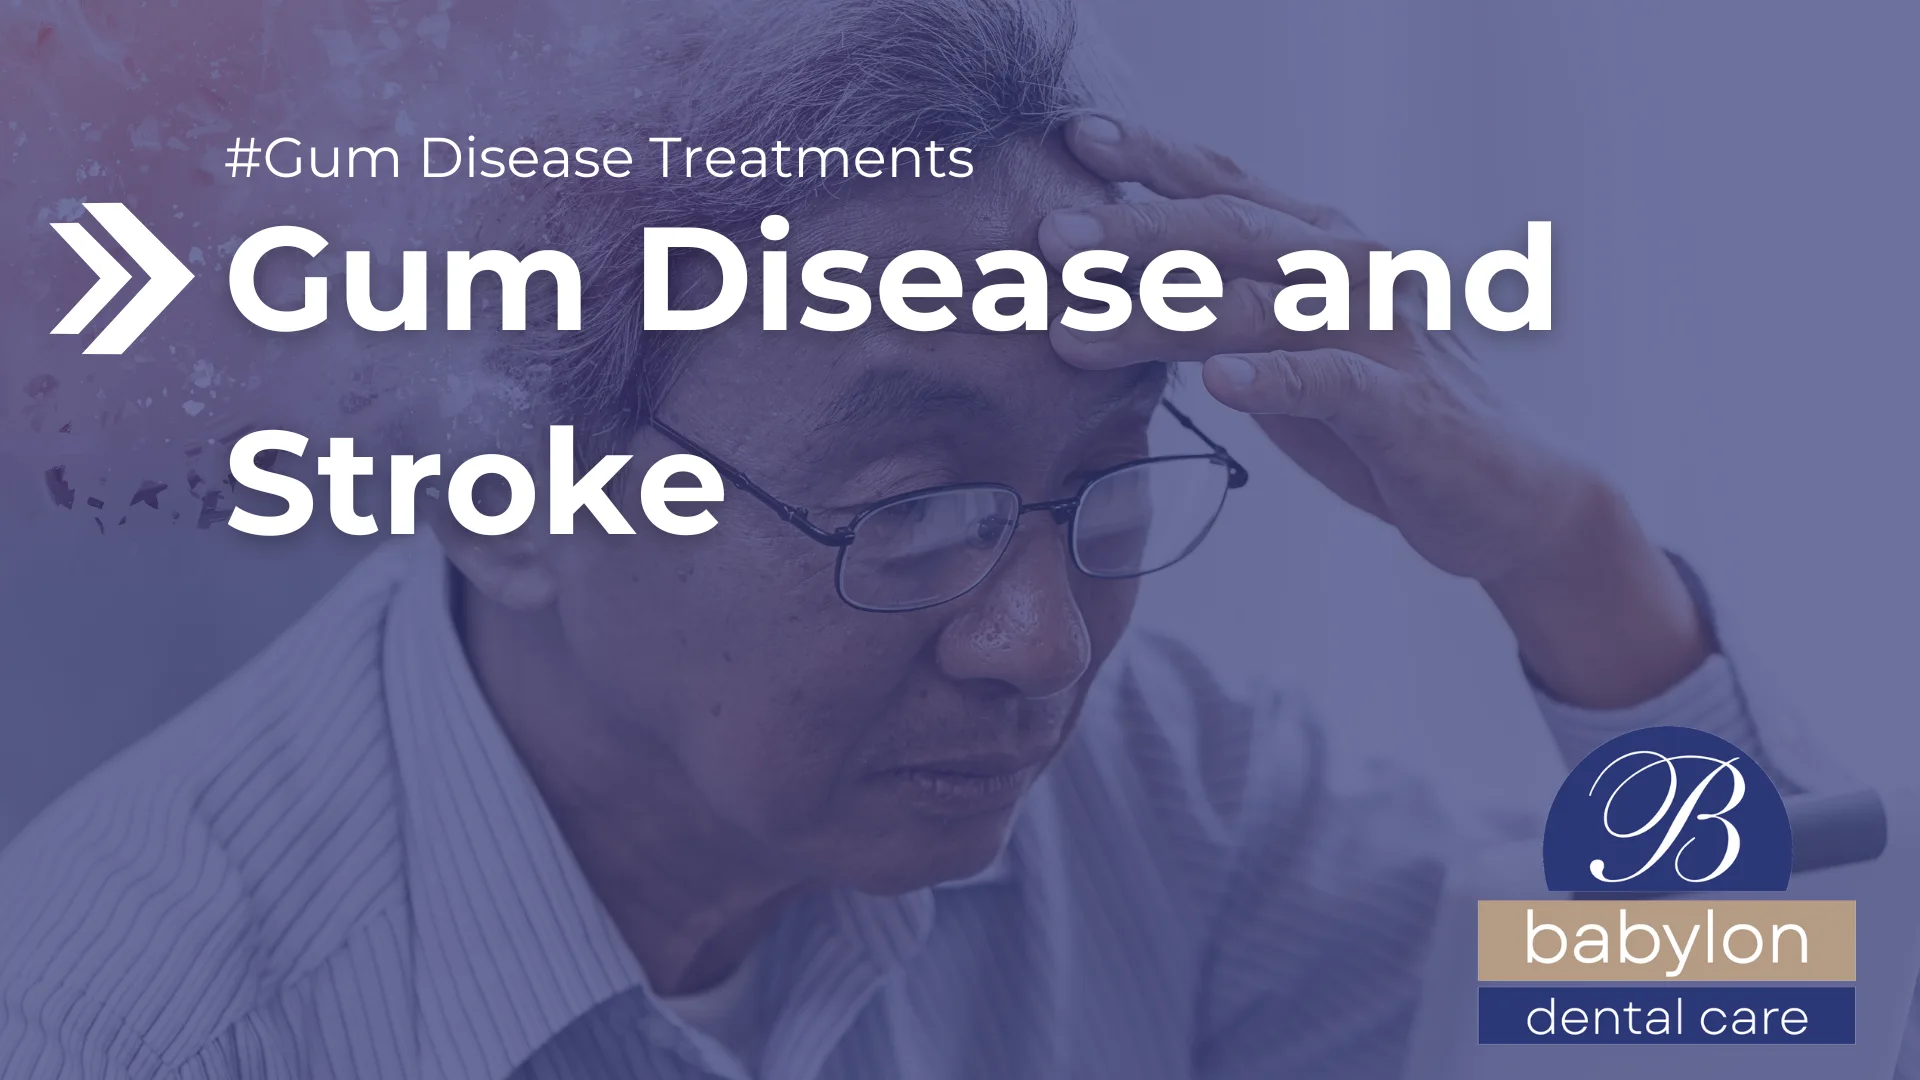 Gum Disease and Stroke Image - new logo